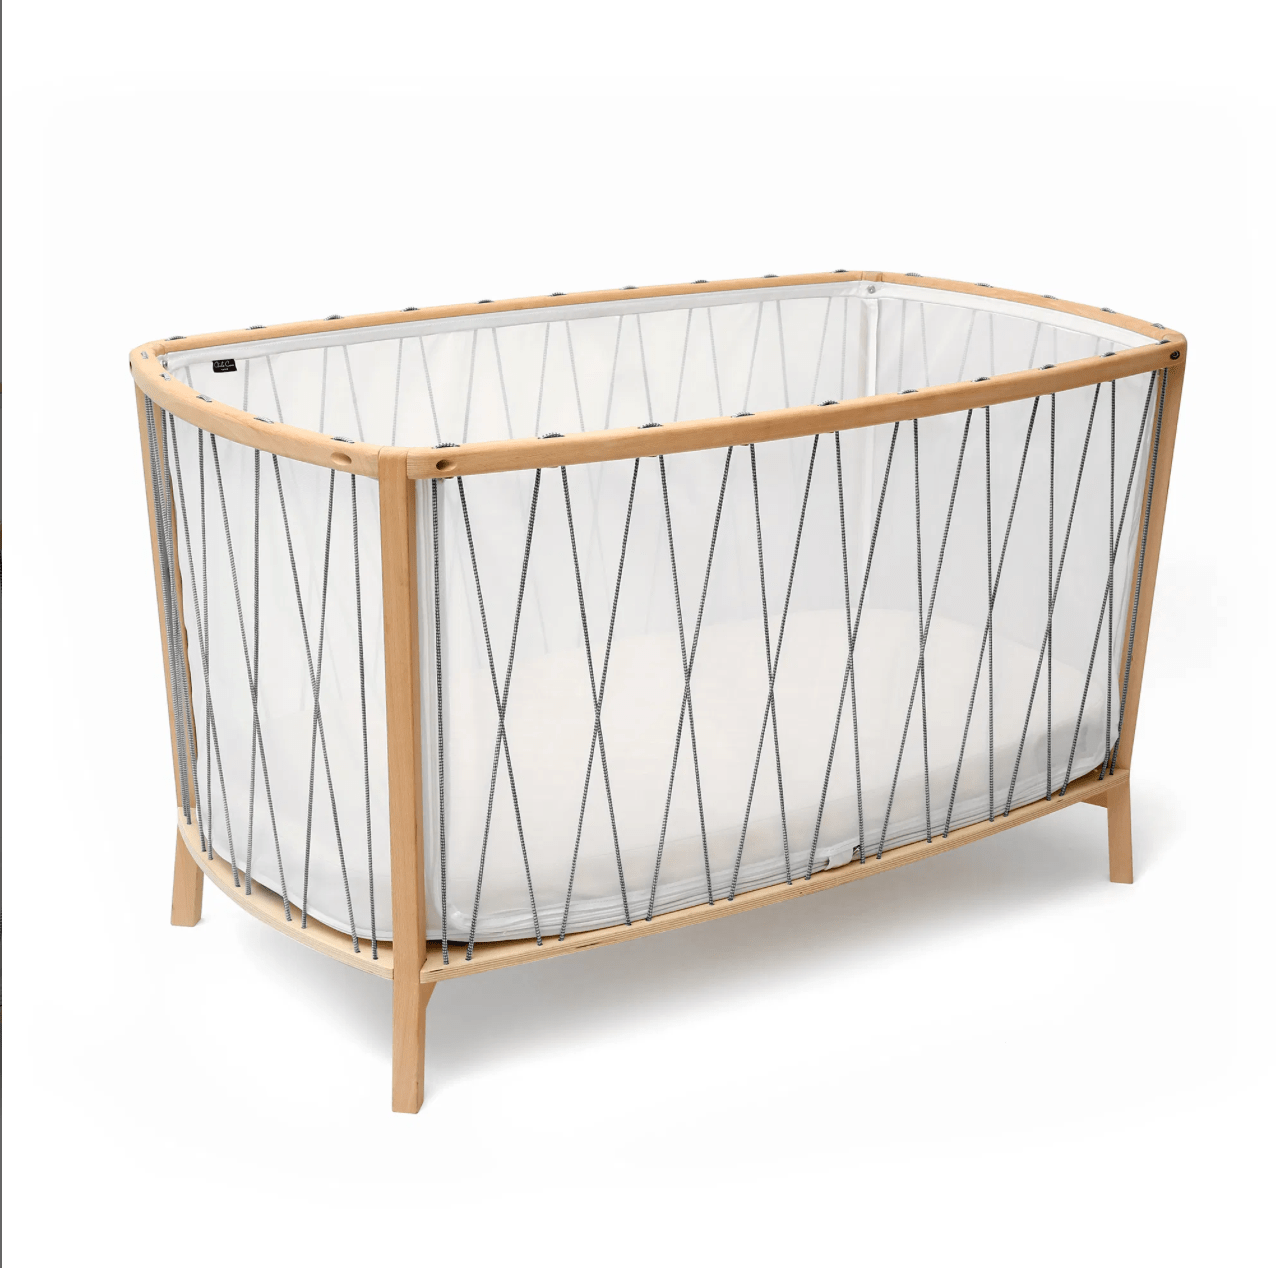 Charlie Crane KIMI Baby Bed, en del av kategorien Furniture - At Home Interiør